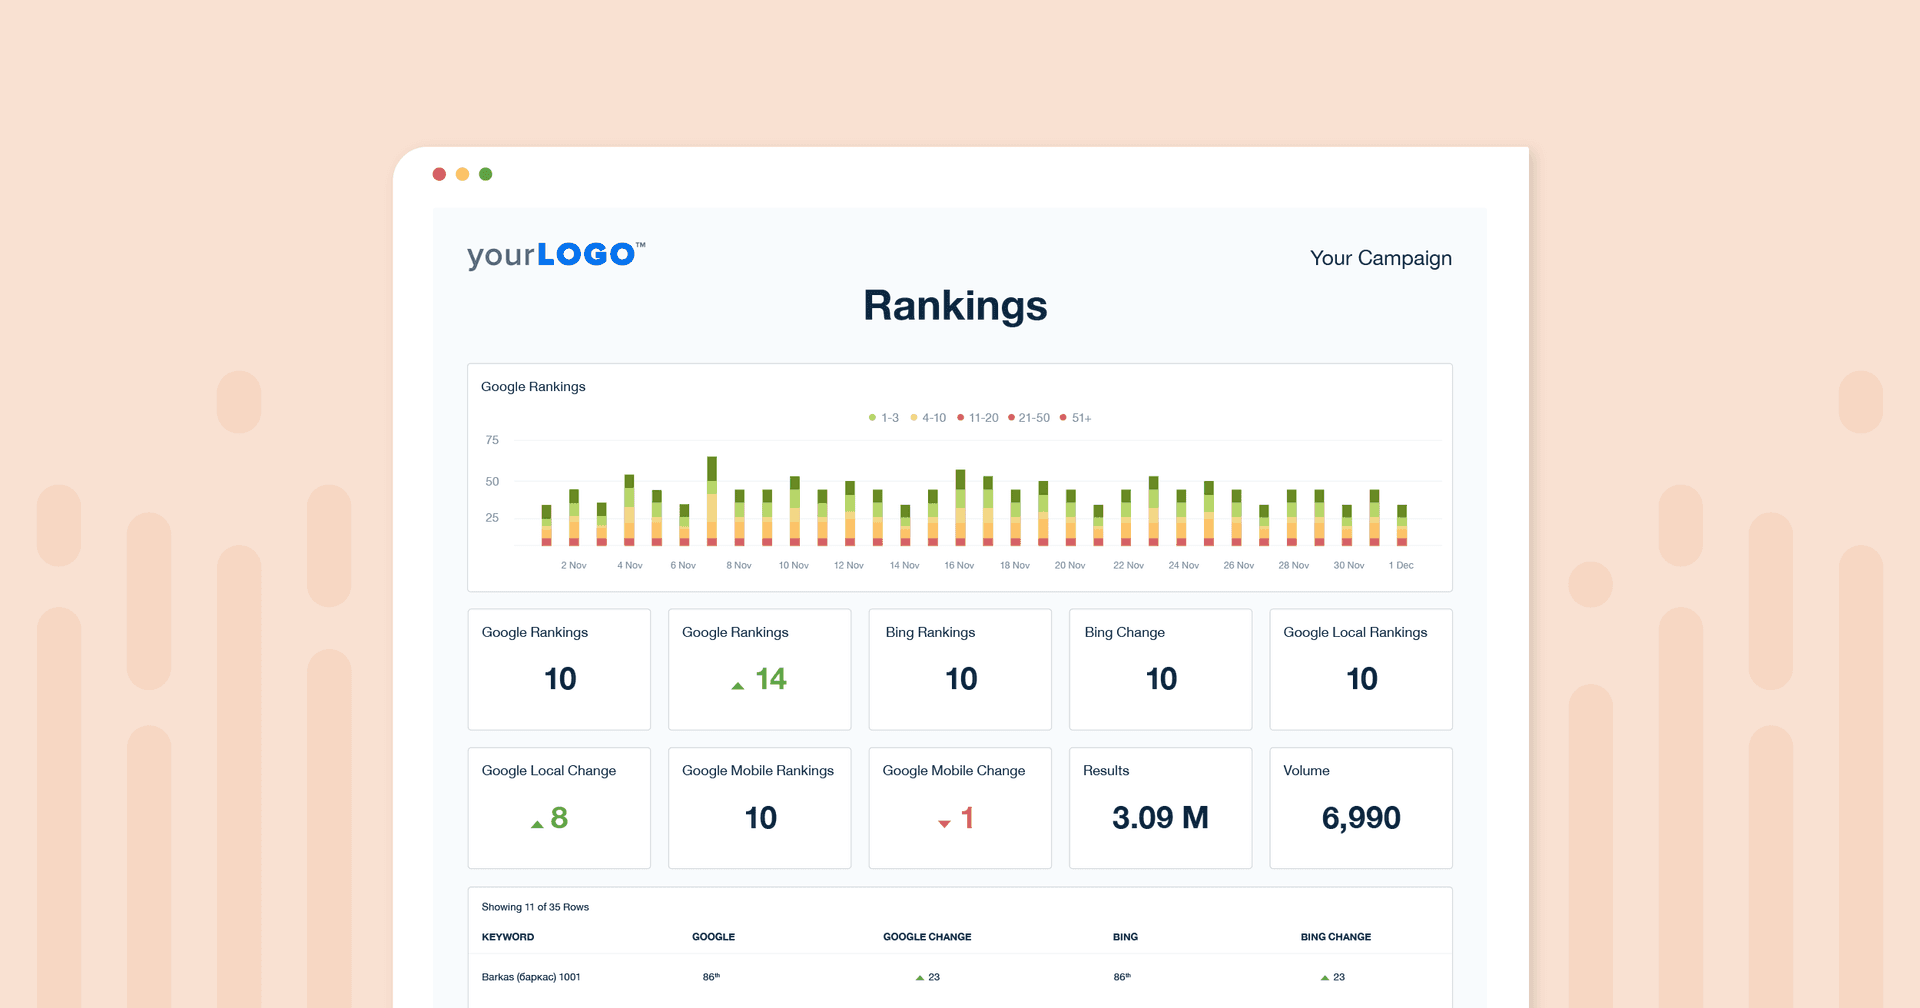 Keyword ranking history dashboard image